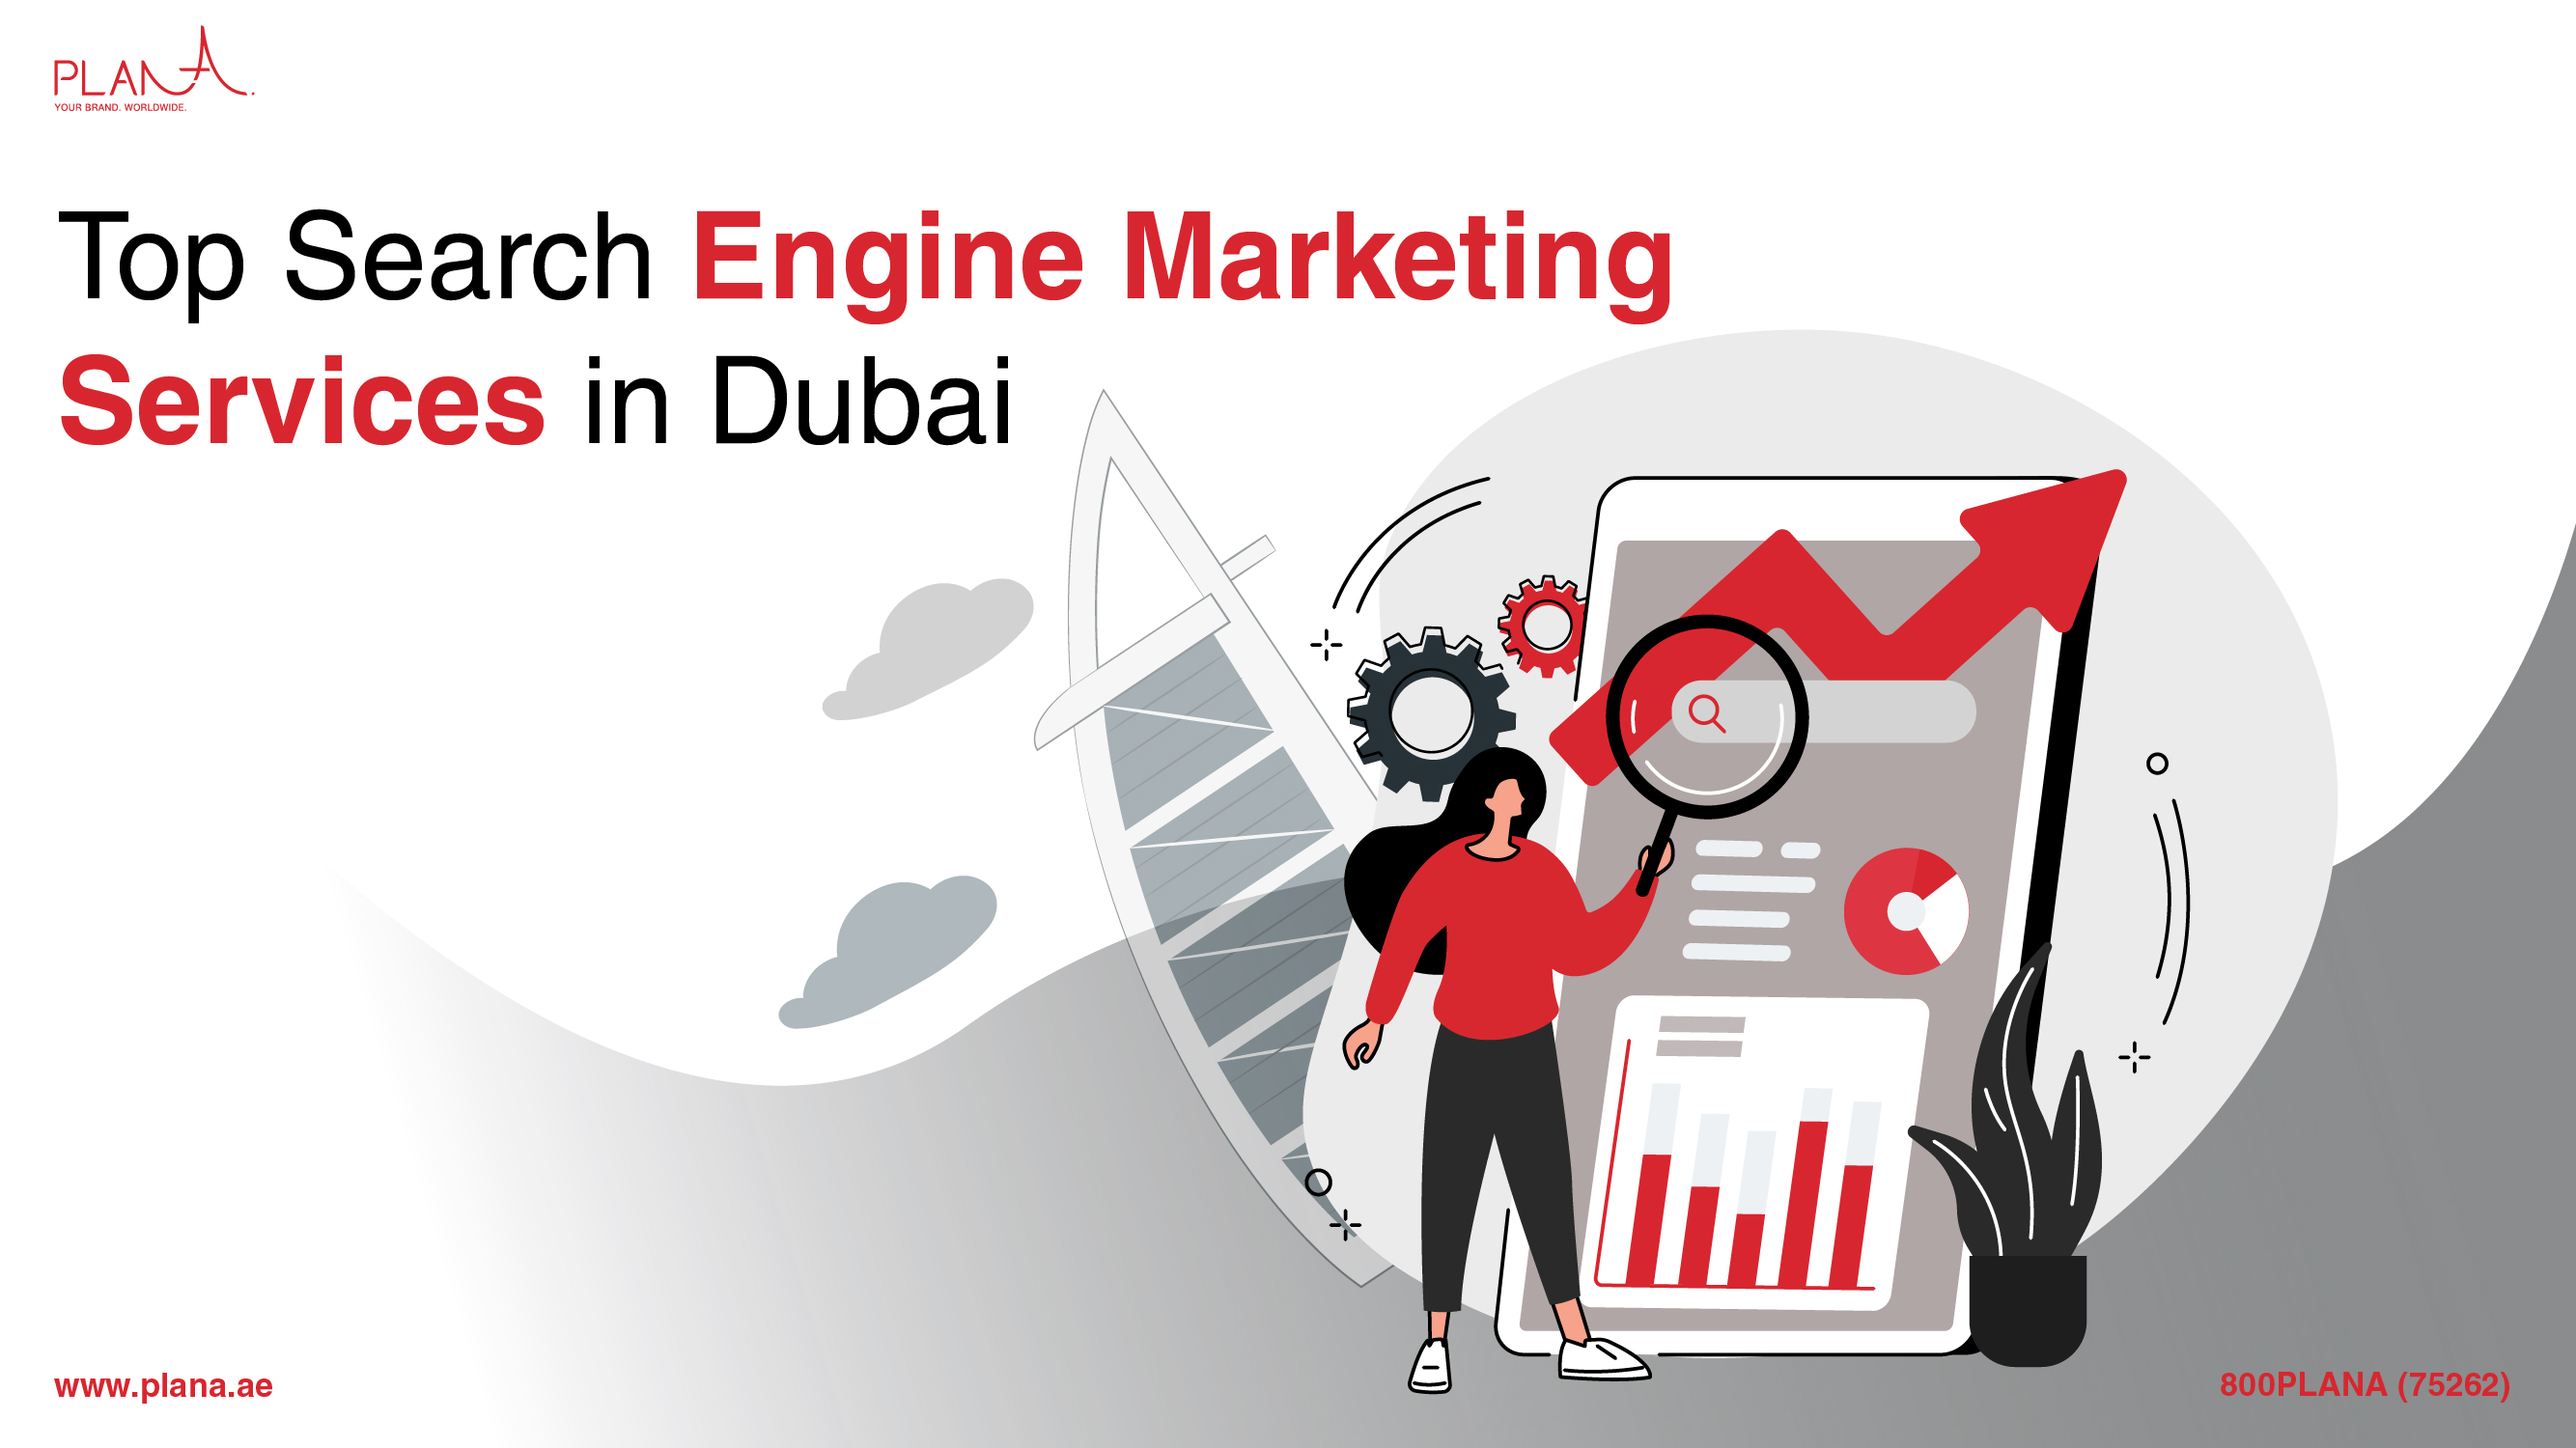 Top Search Engine Marketing Services in Dubai